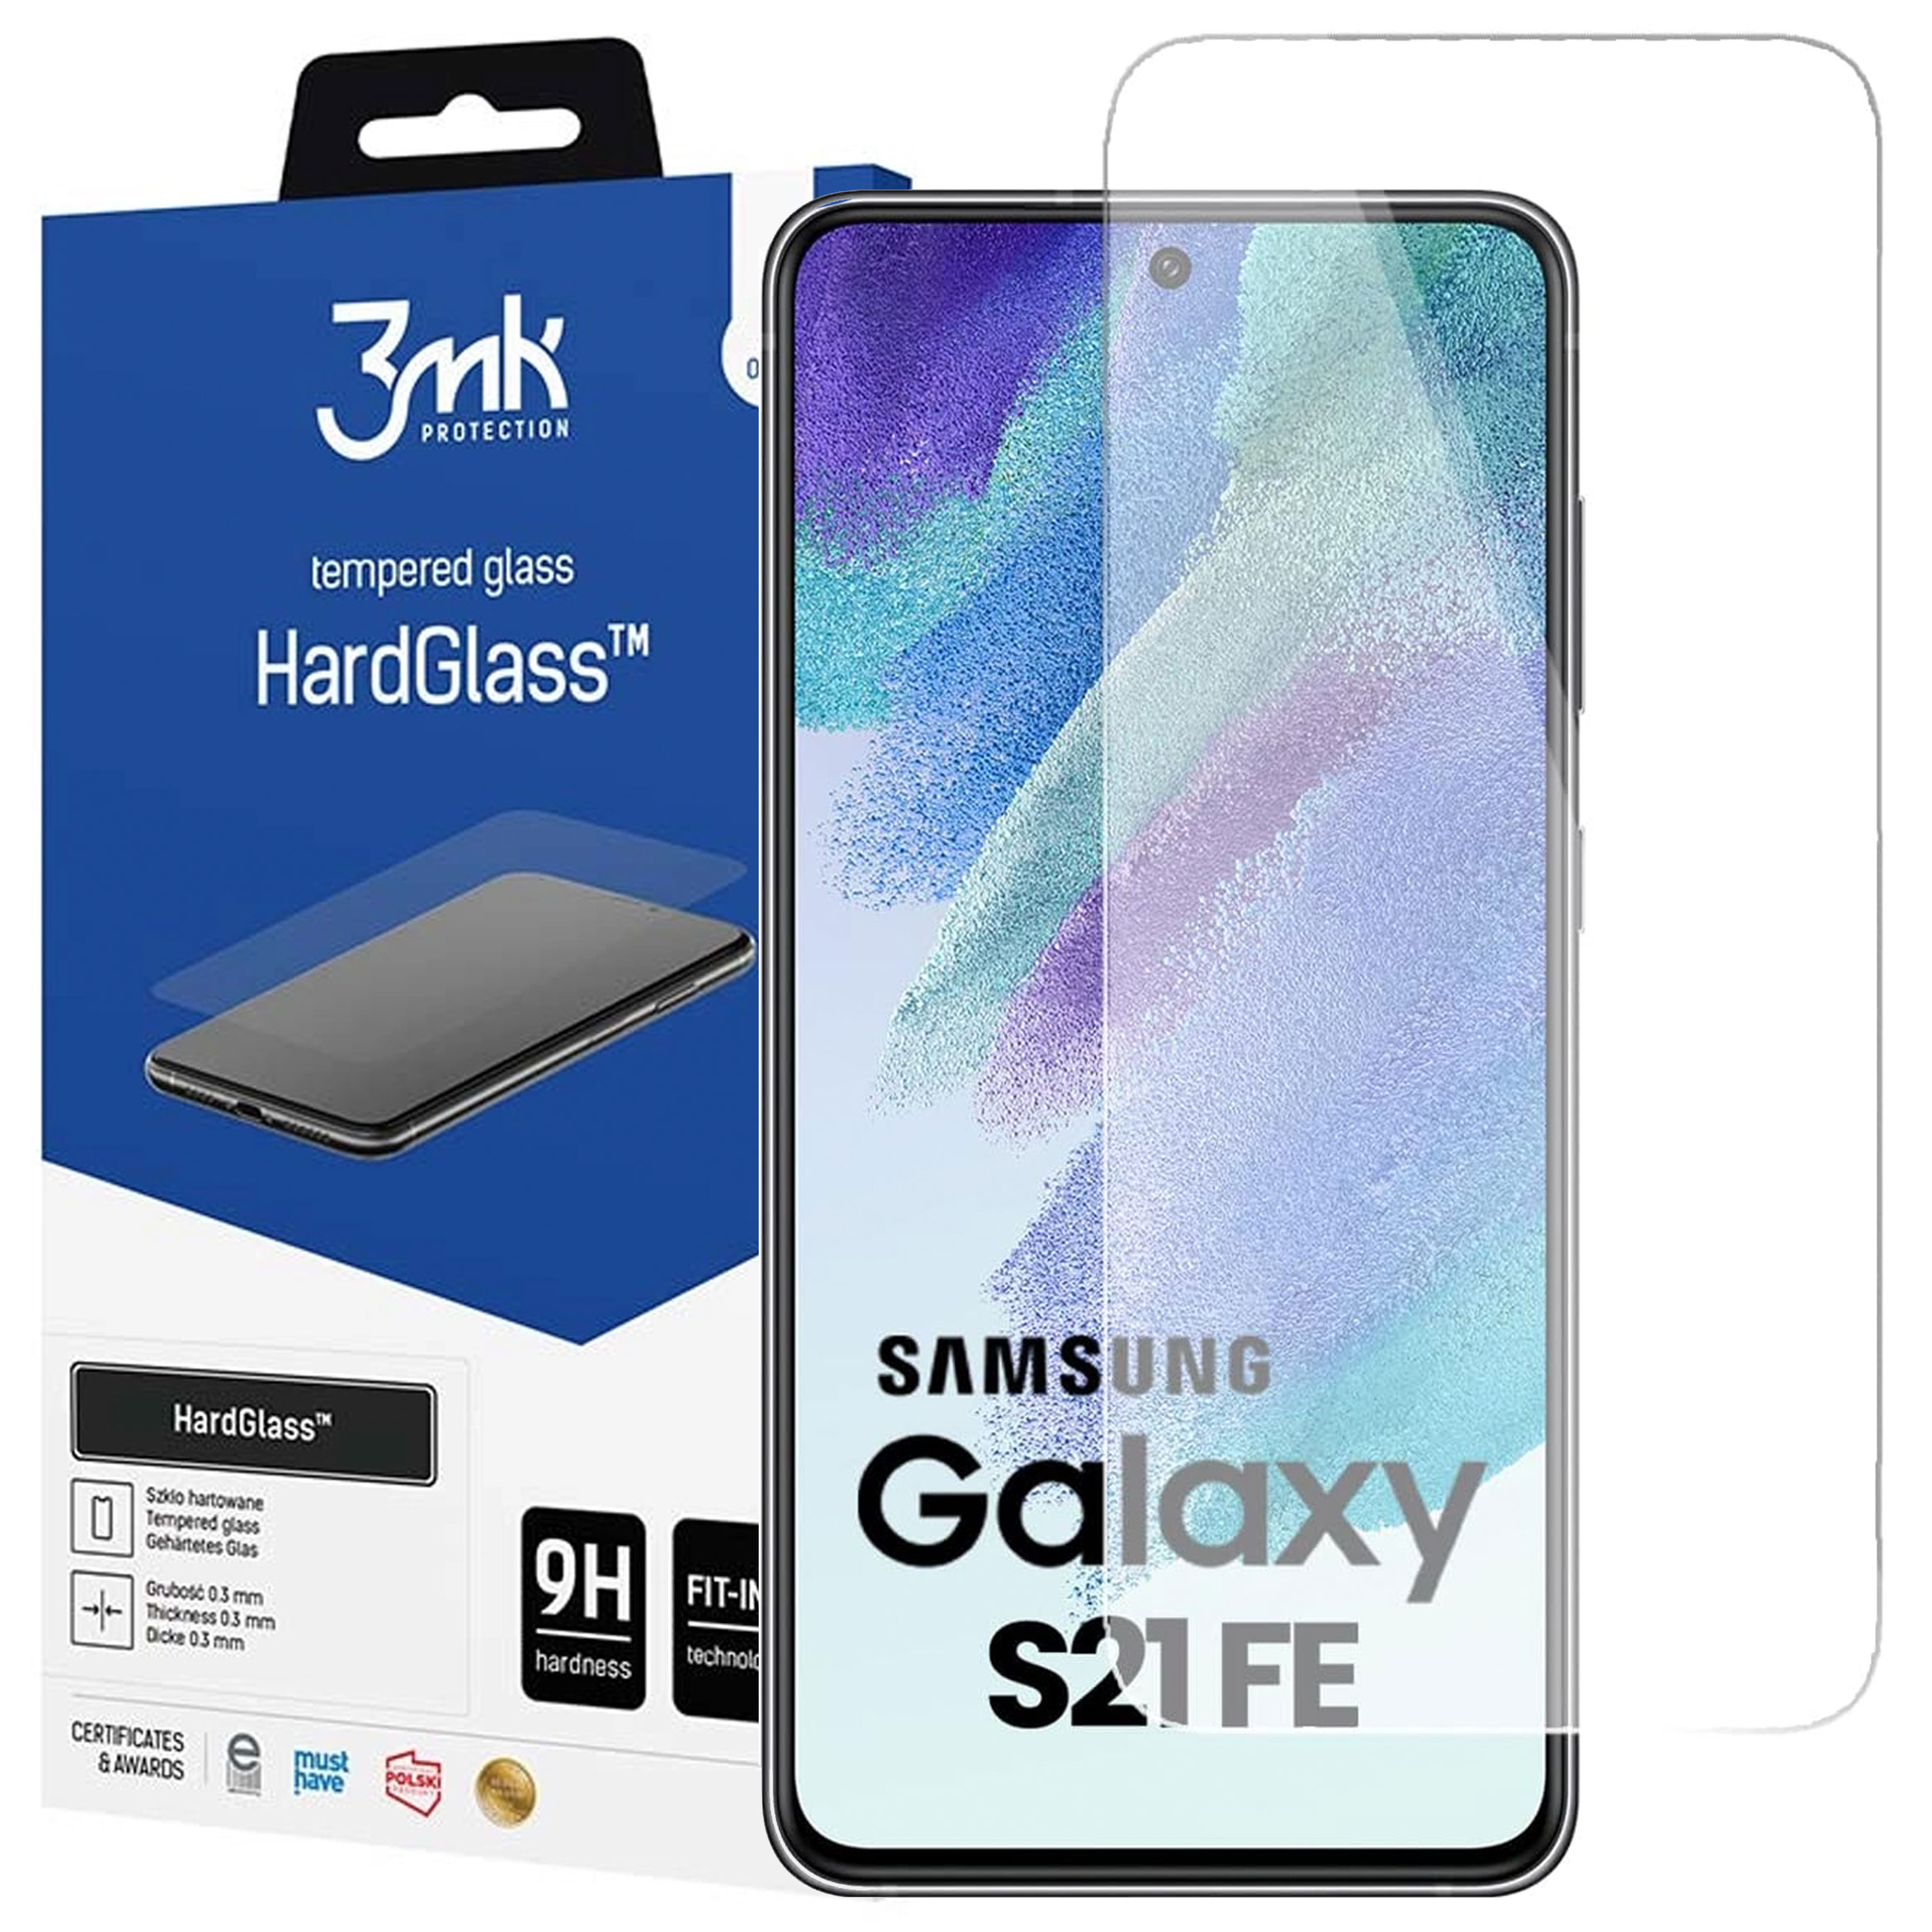 Szkło hartowane do Samsung Galaxy S21 FE 5G 3mk HardGlass na ekran 9H